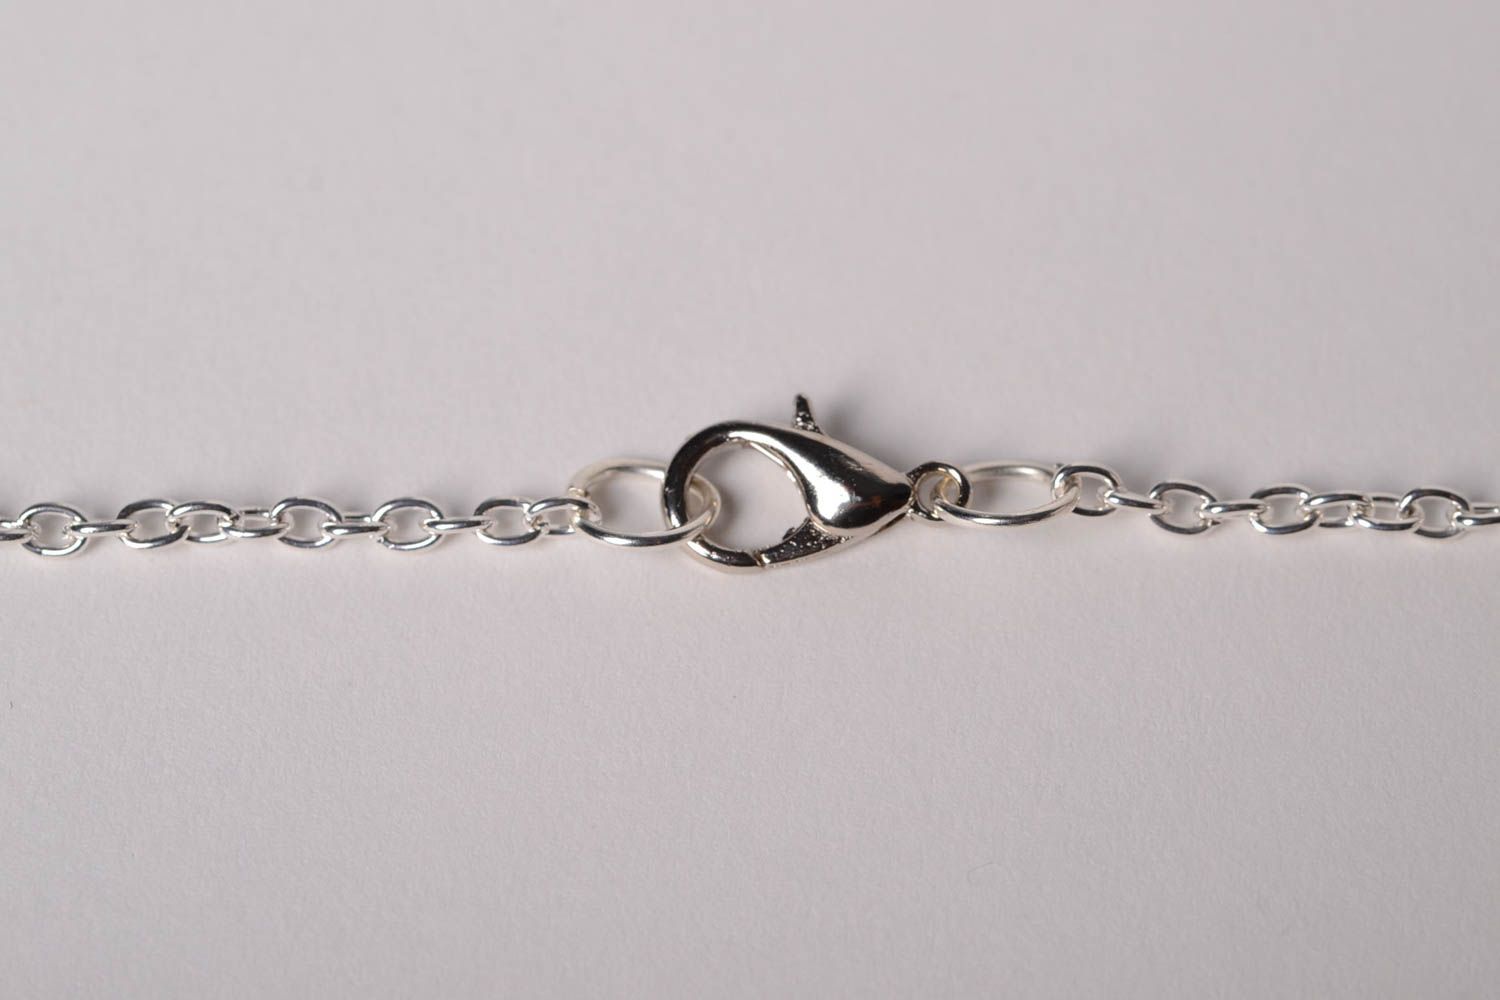 Handmade plastic pendant necklace decoupage ideas artisan jewelry designs photo 5